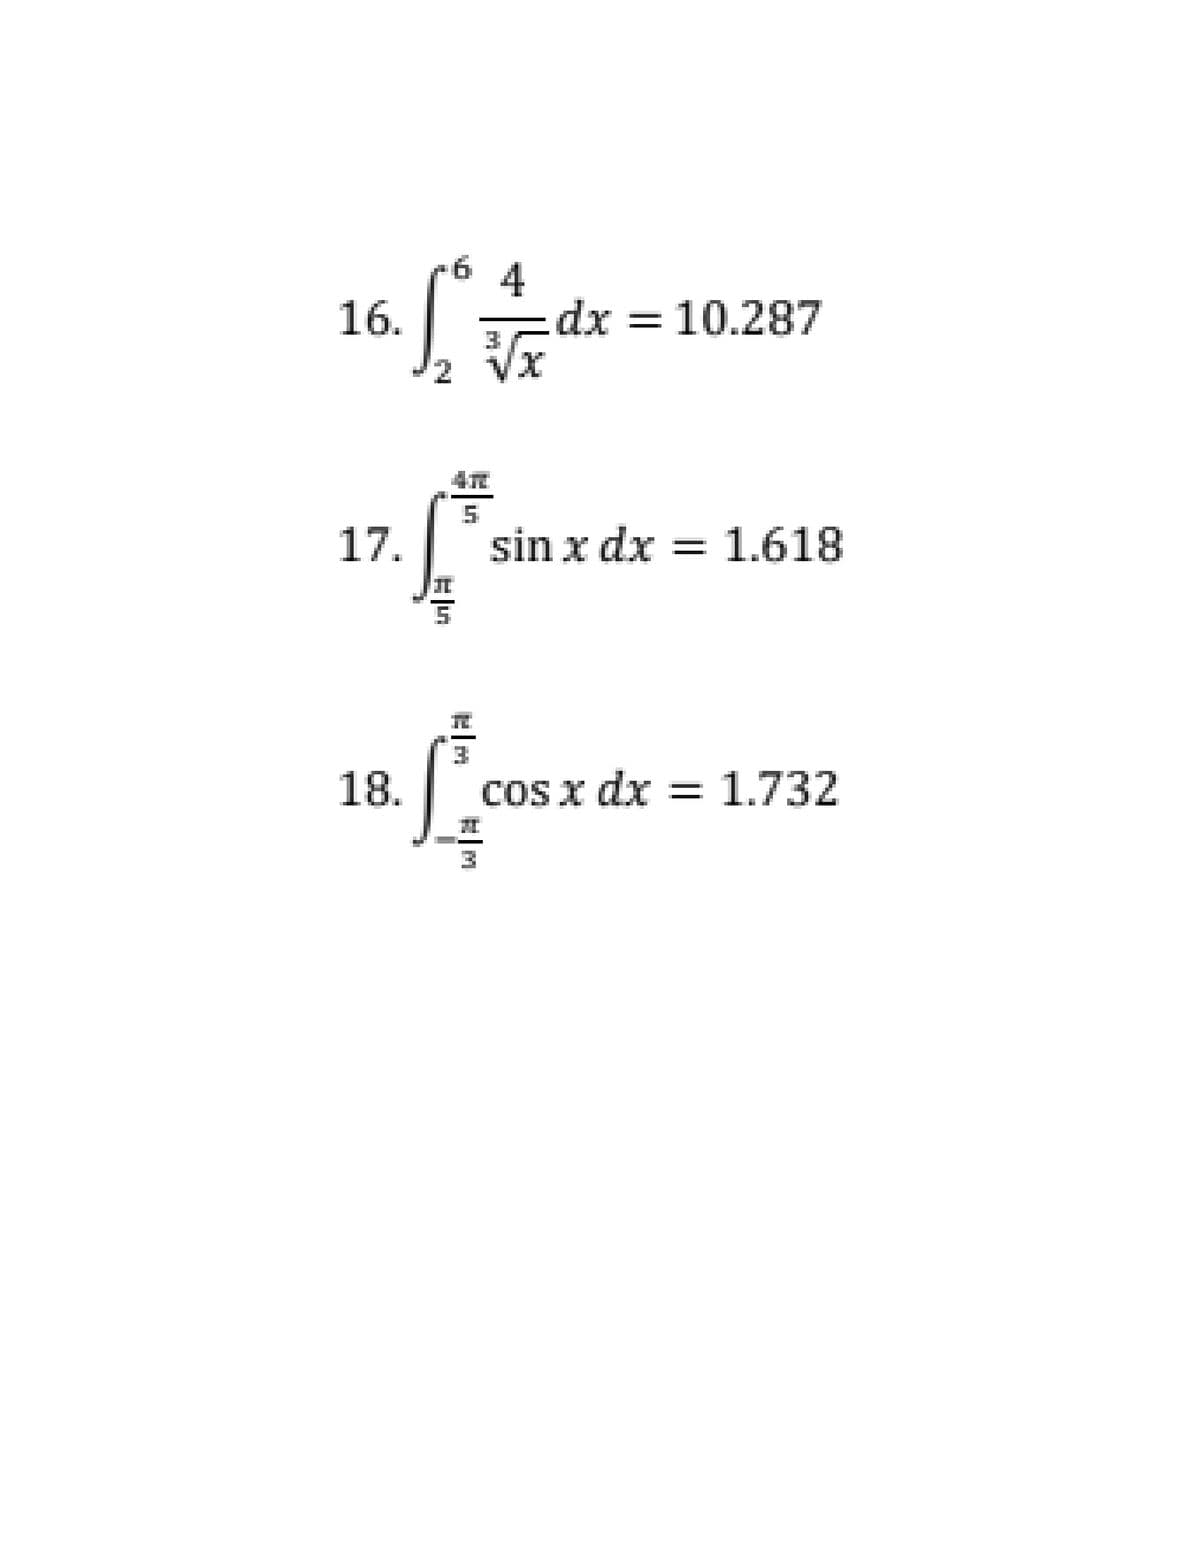 dx
Vx
16.
= 10.287
17.
sin x dx = 1.618
18.
cos x dx = 1.732
